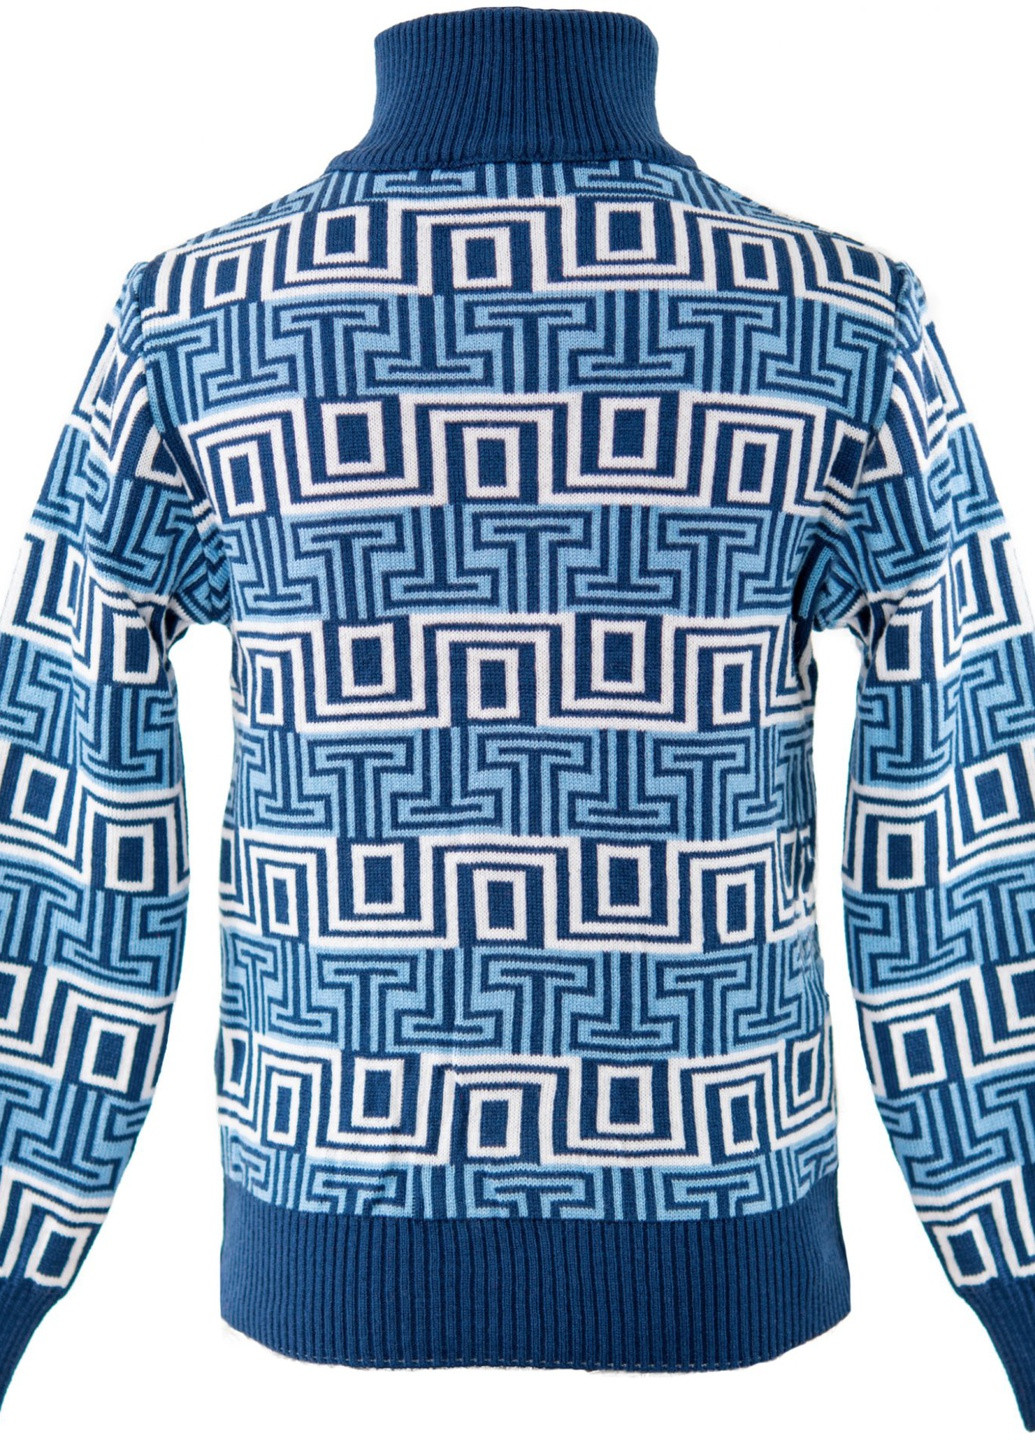 Синий светри кофта на дівчинку (т)17614-709 Lemanta